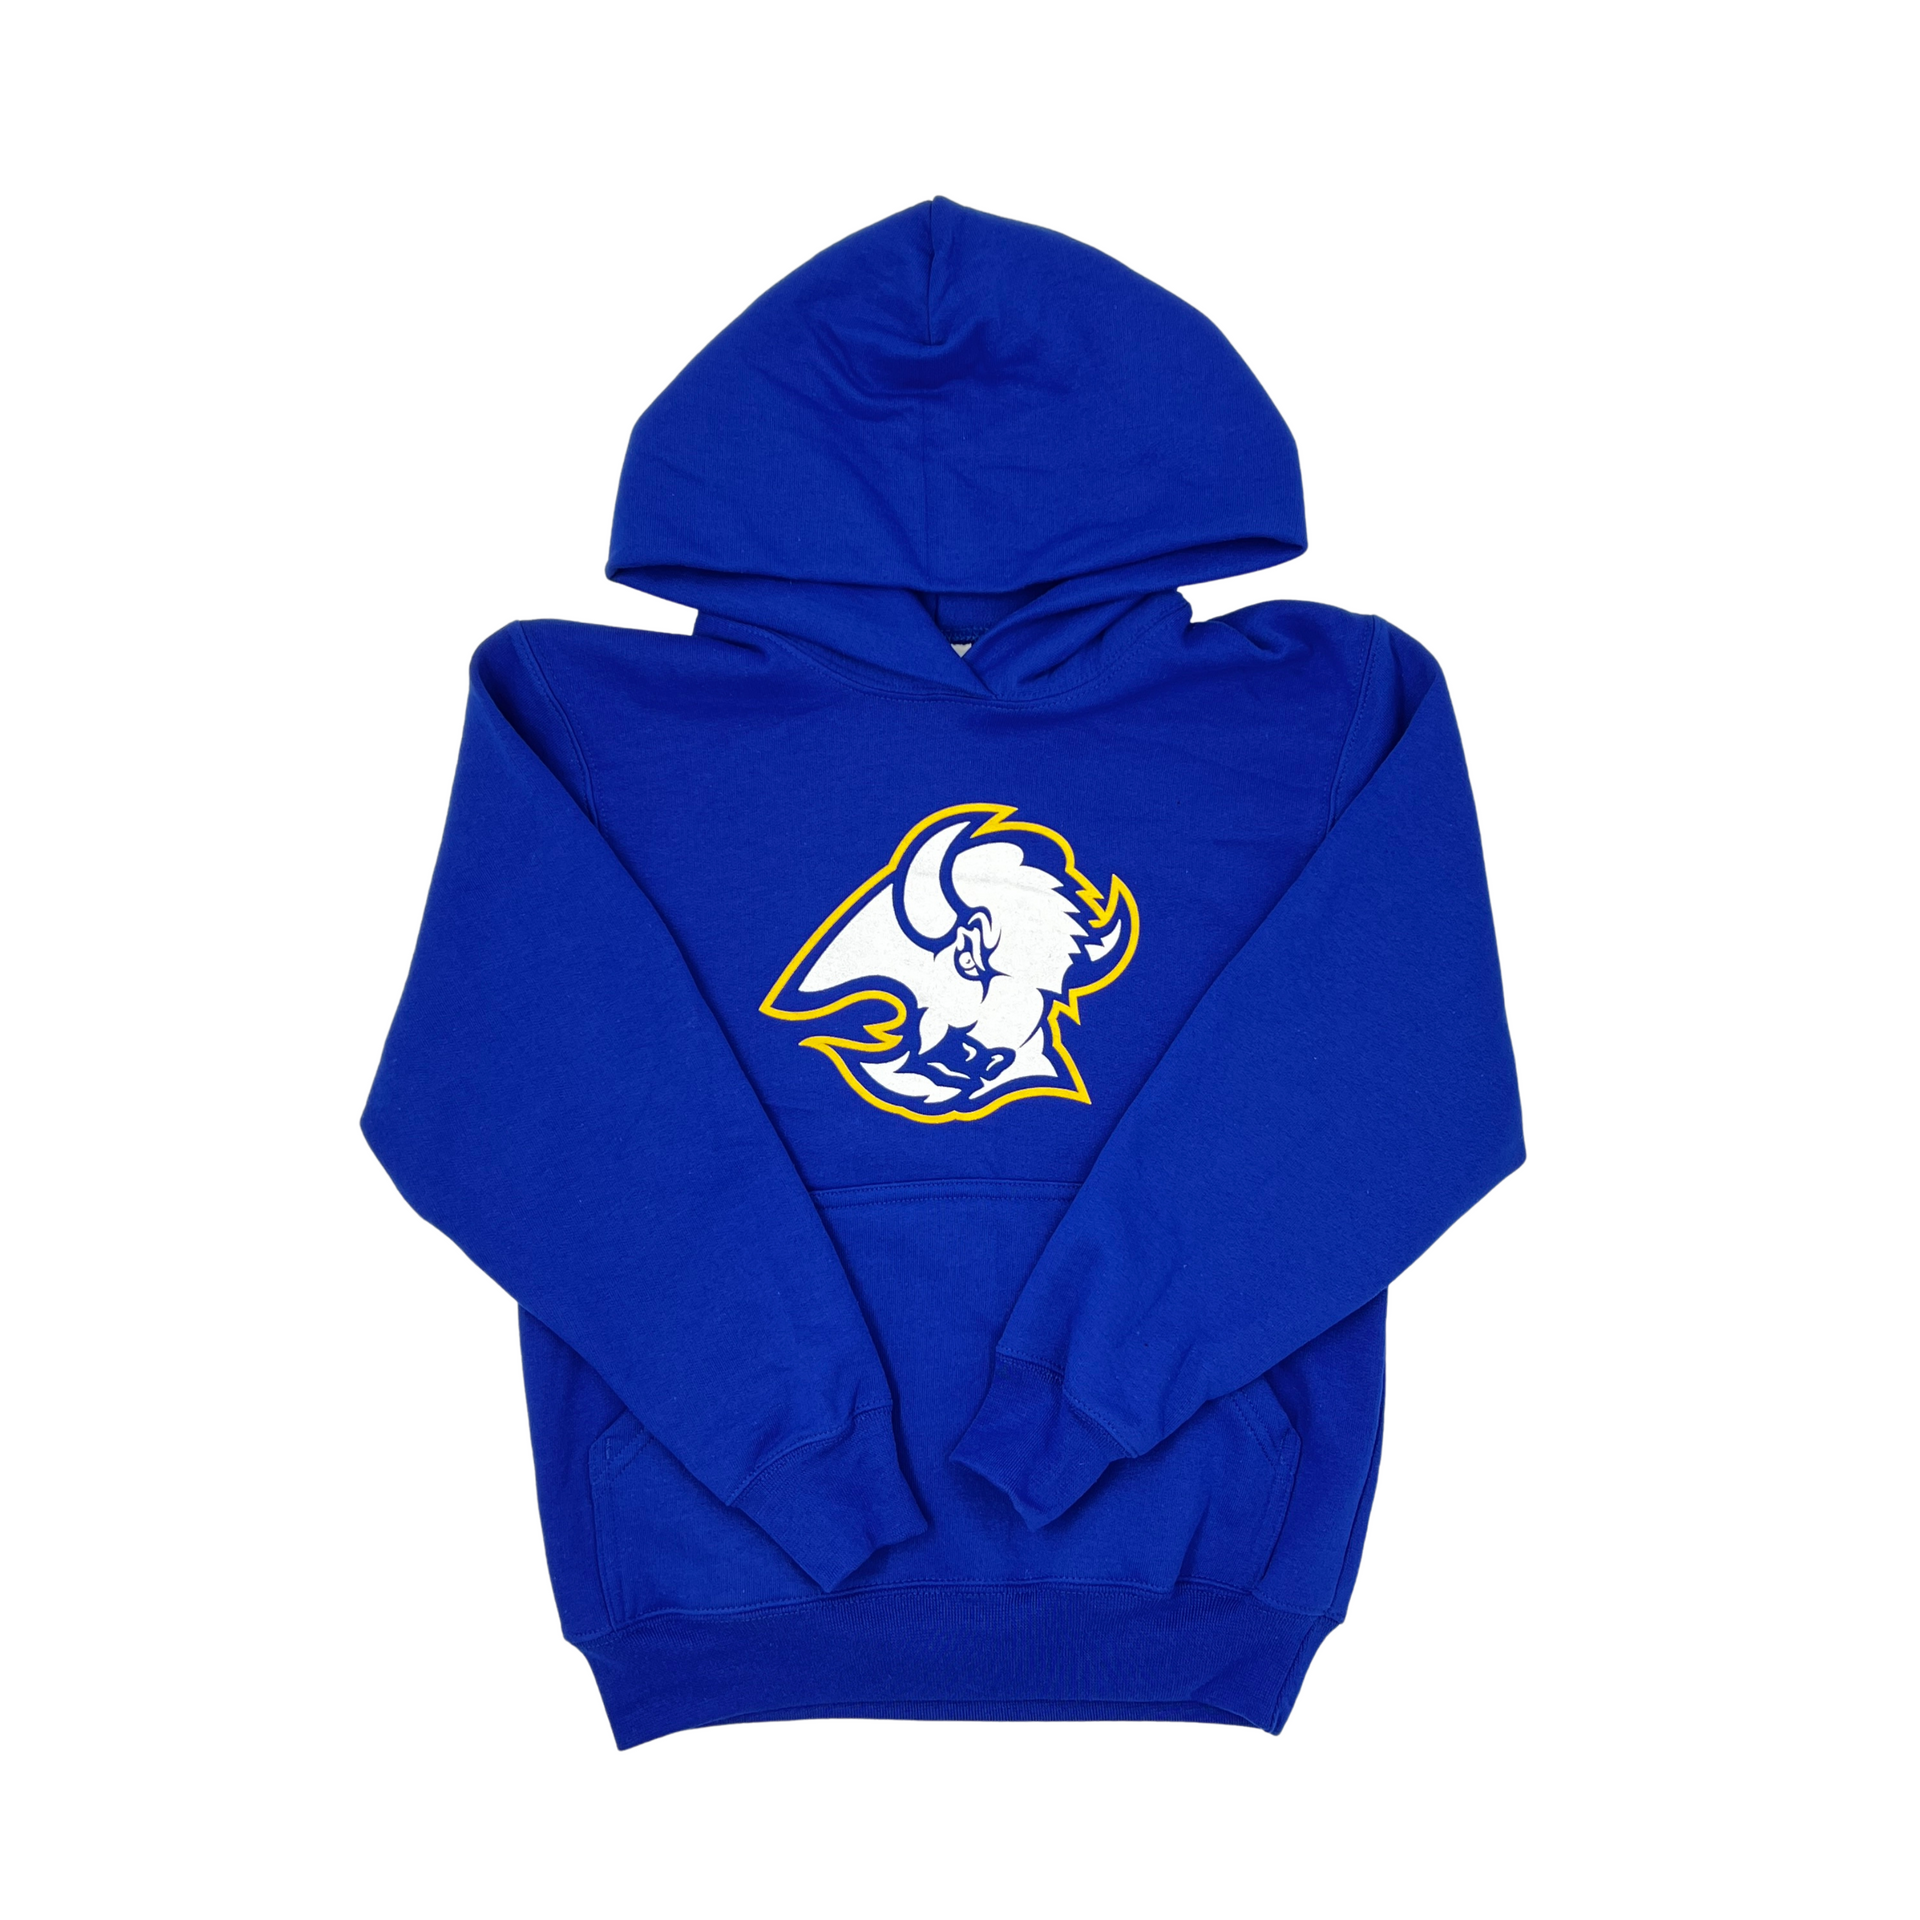 Buffalo Braves - Buffalo Basketball throwback hoodie – Store716